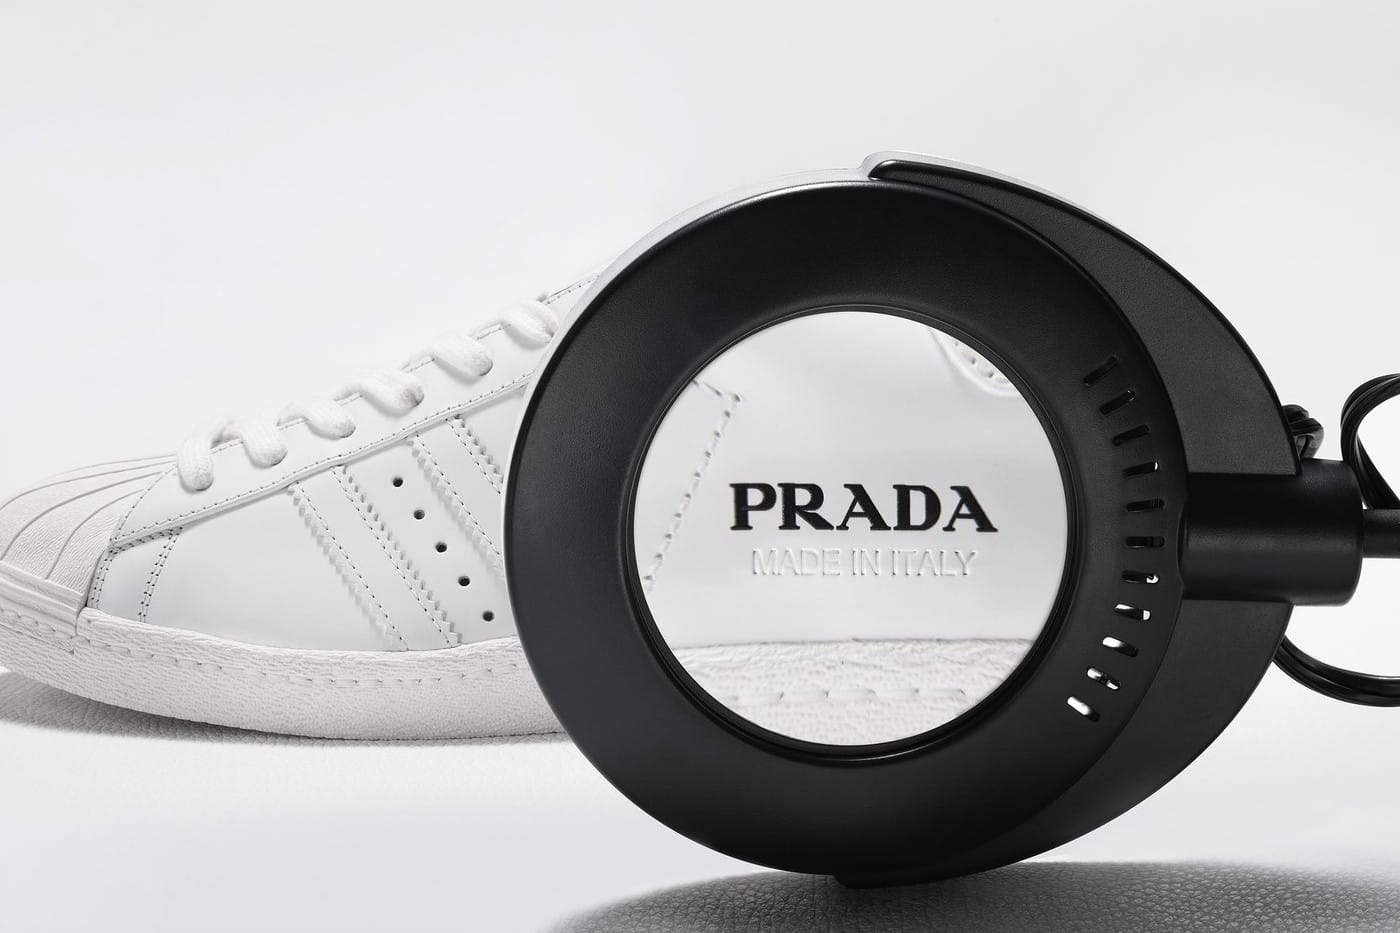 prada made to order shoes price